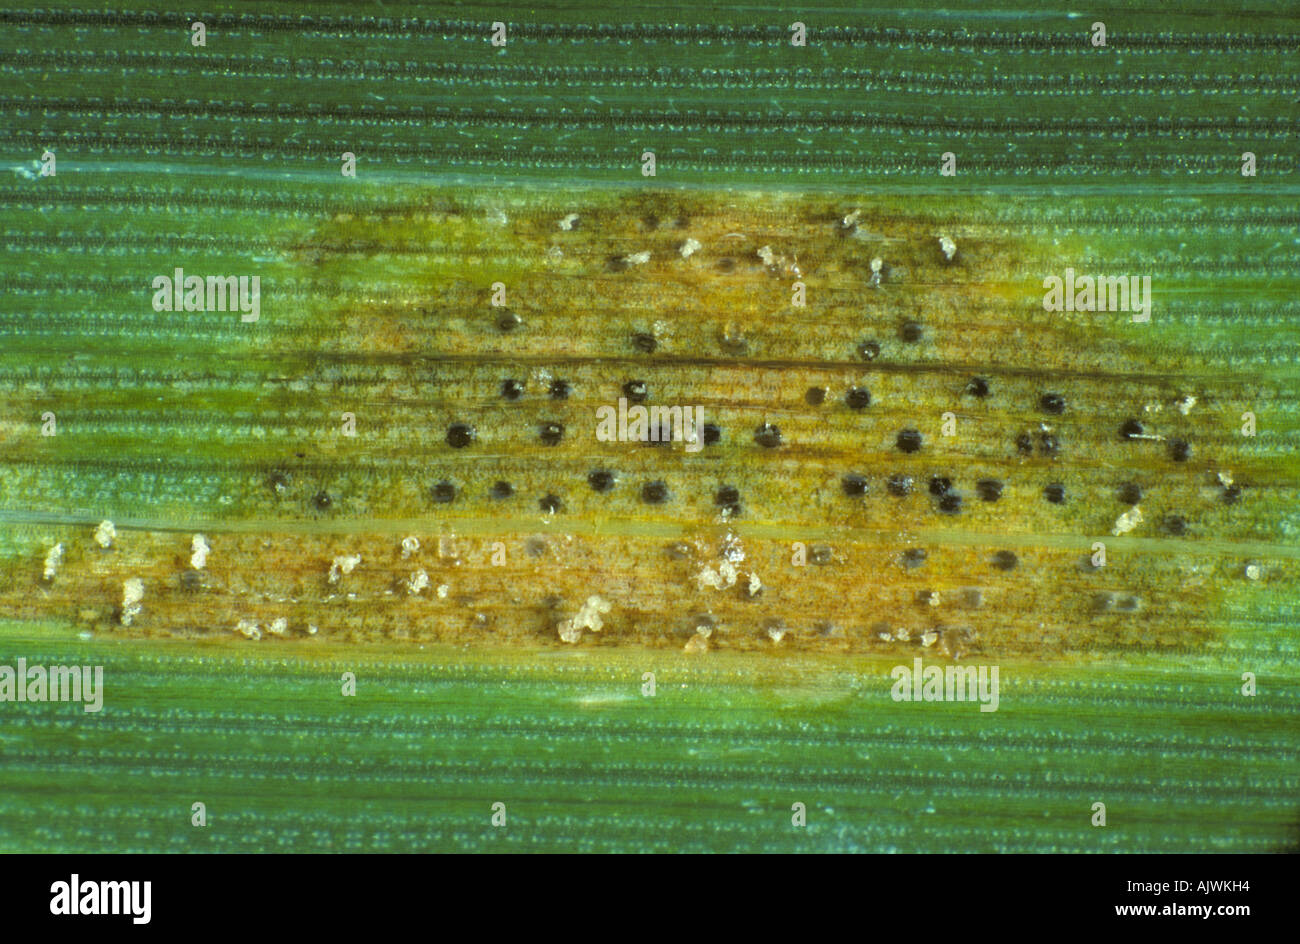 Septoria leaf spot Zymoseptoria tritici lesion with pycnidia cirri on wheat leaf Stock Photo